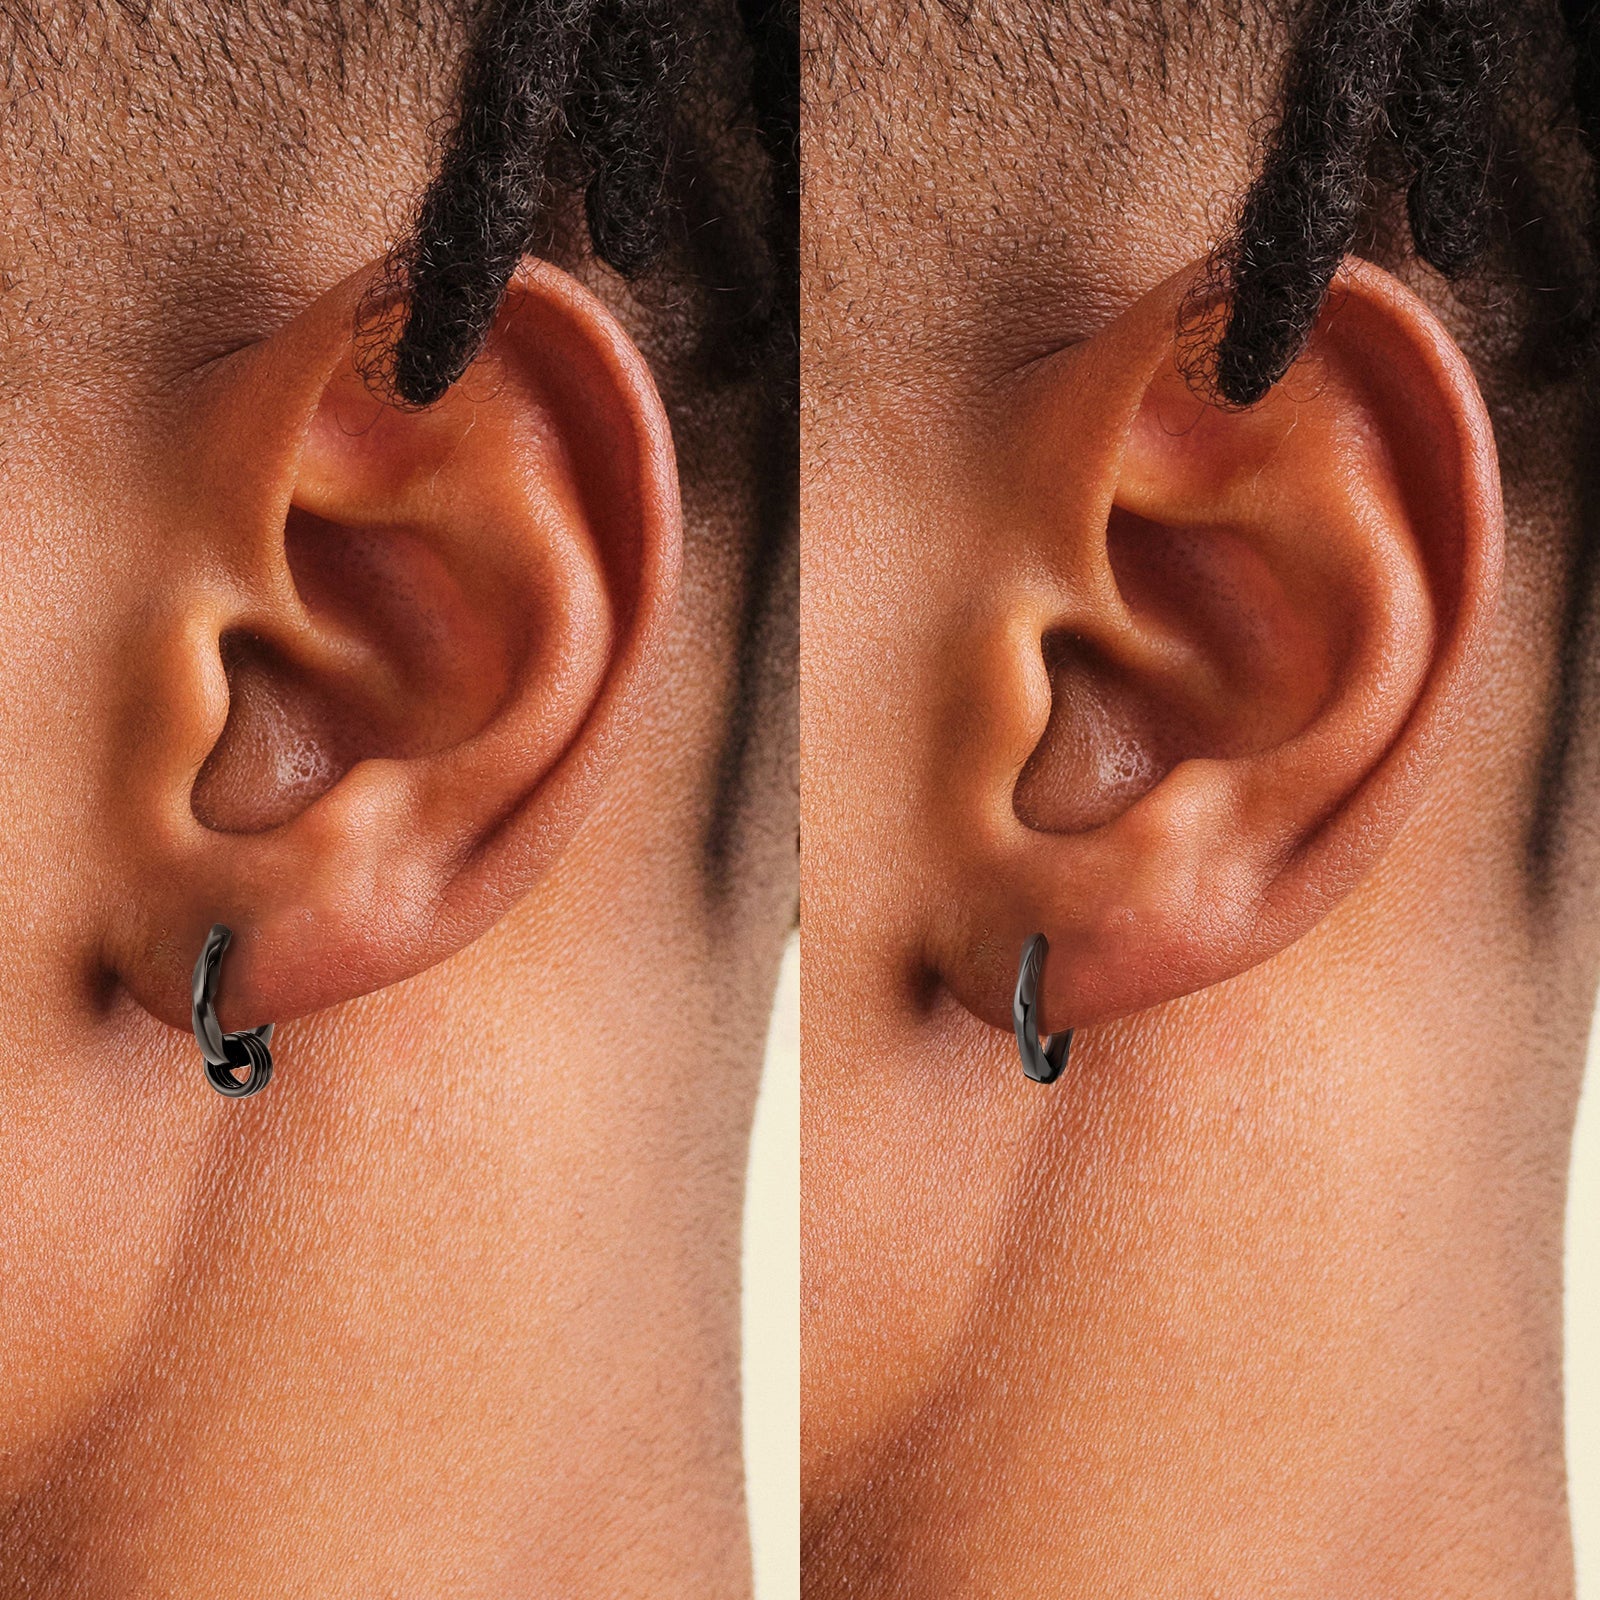 Wholesale Men's Earrings 15mm 2in1 Black Mens Hoop Earring Twisted with Detachable Rings 925 Sterling Silver